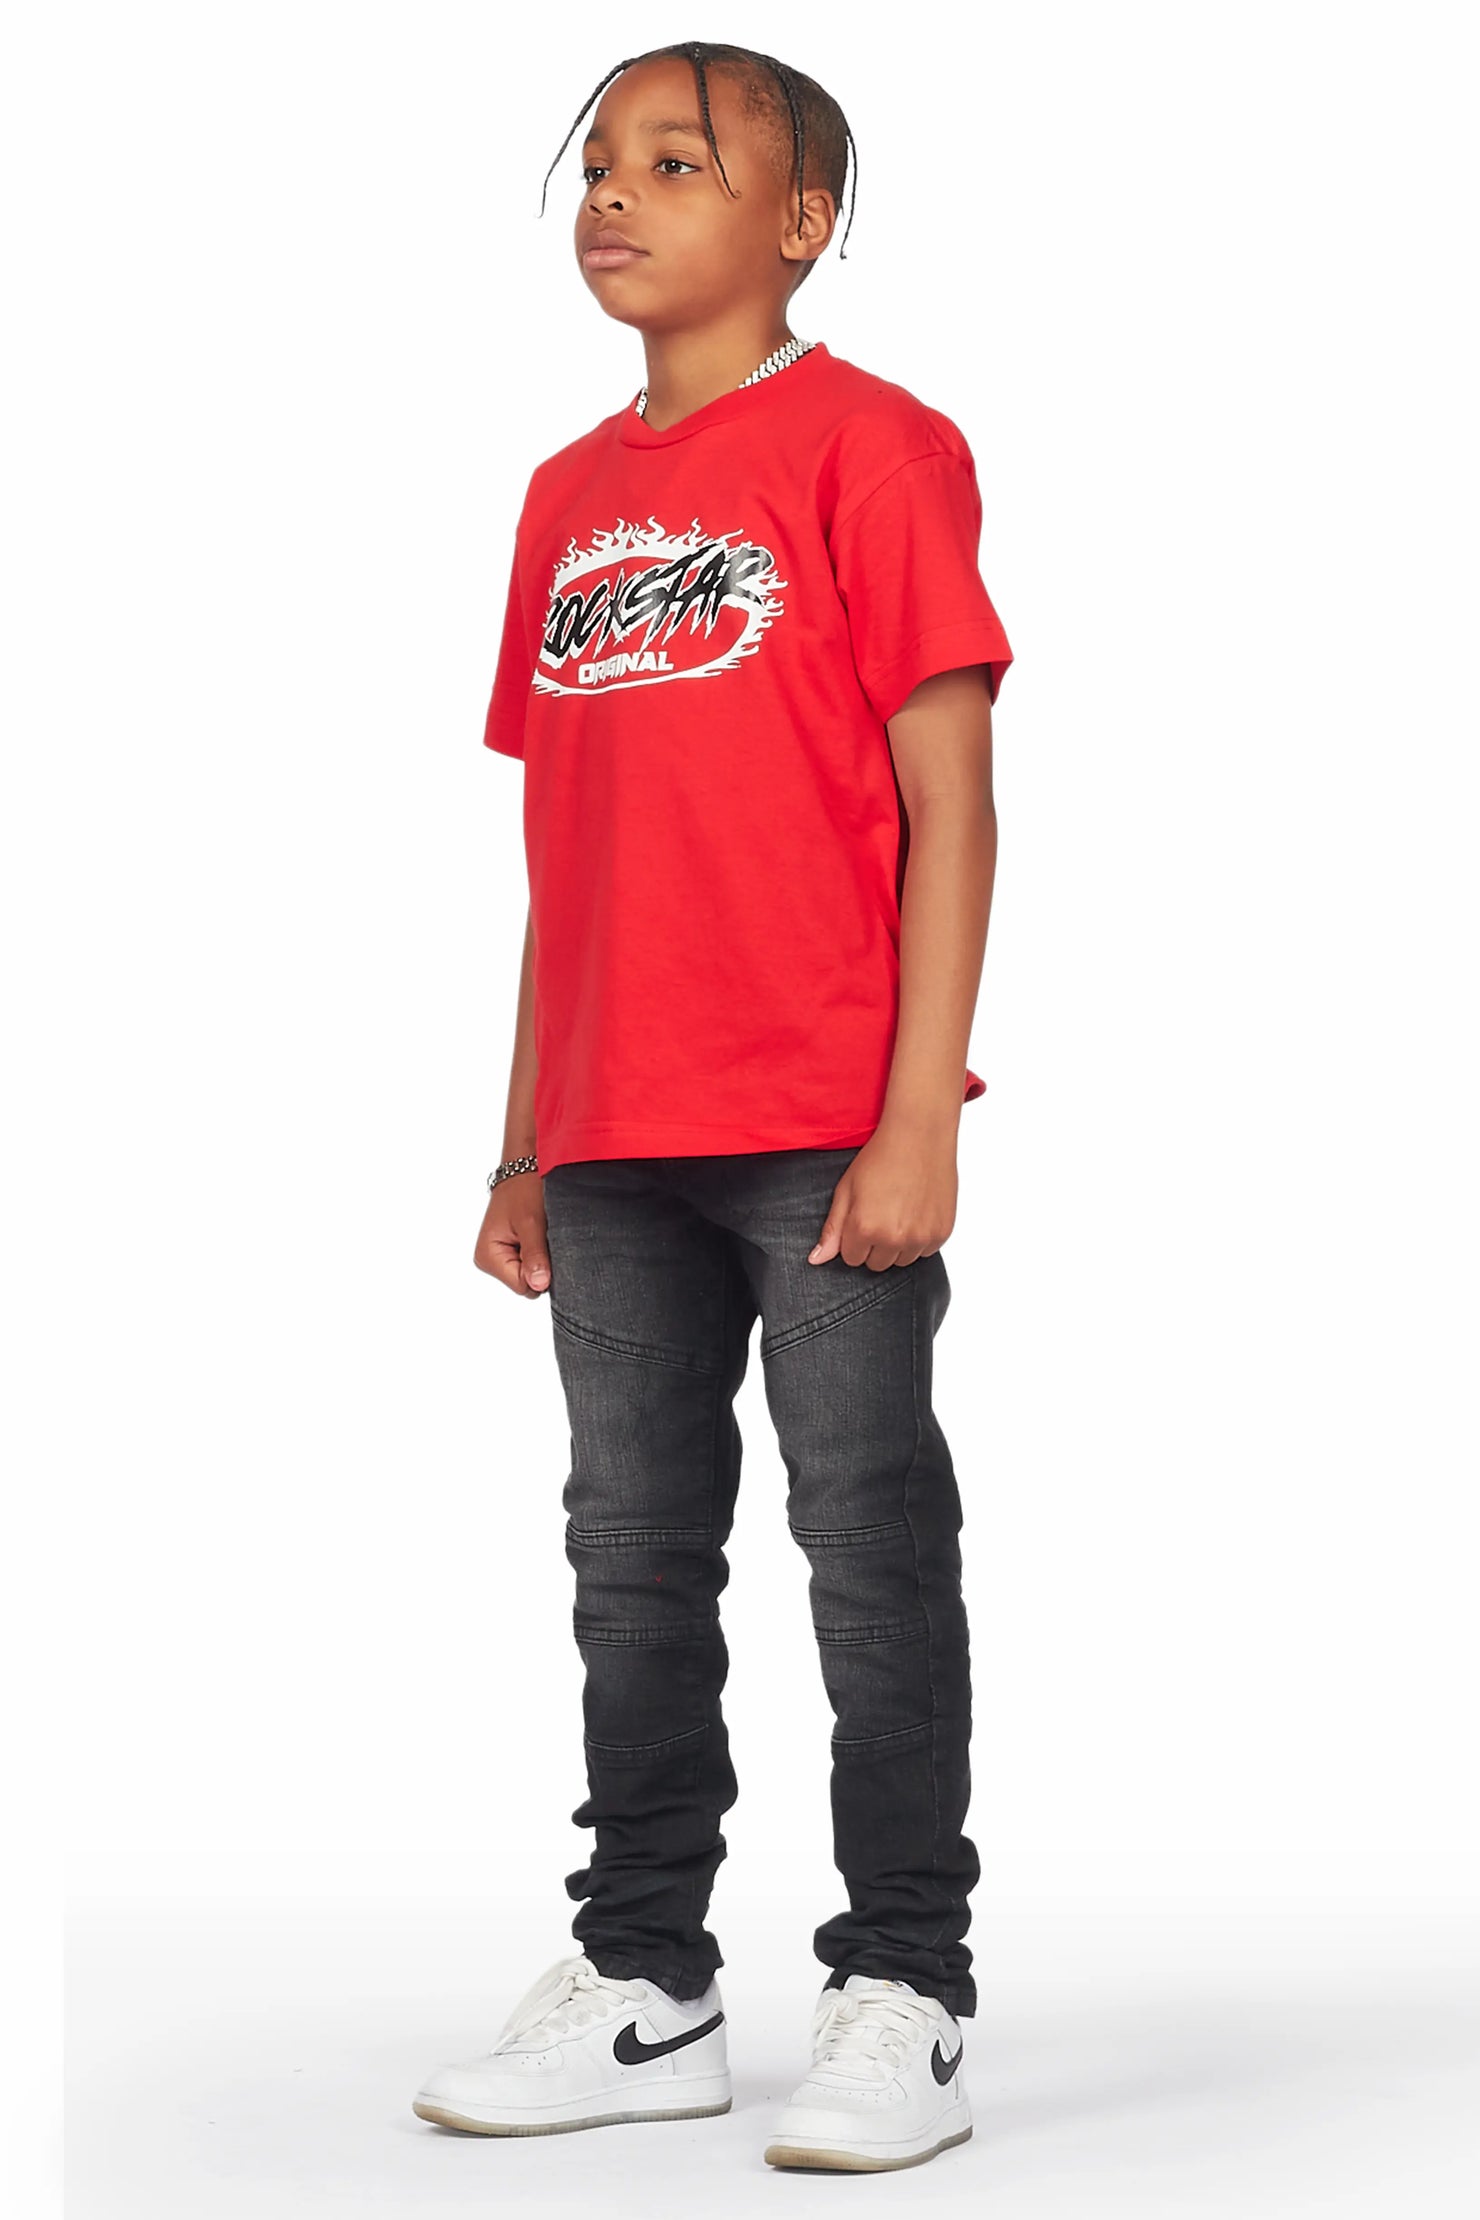 Boys Isamu Red/Black T-Shirt/Skinny Jean Set